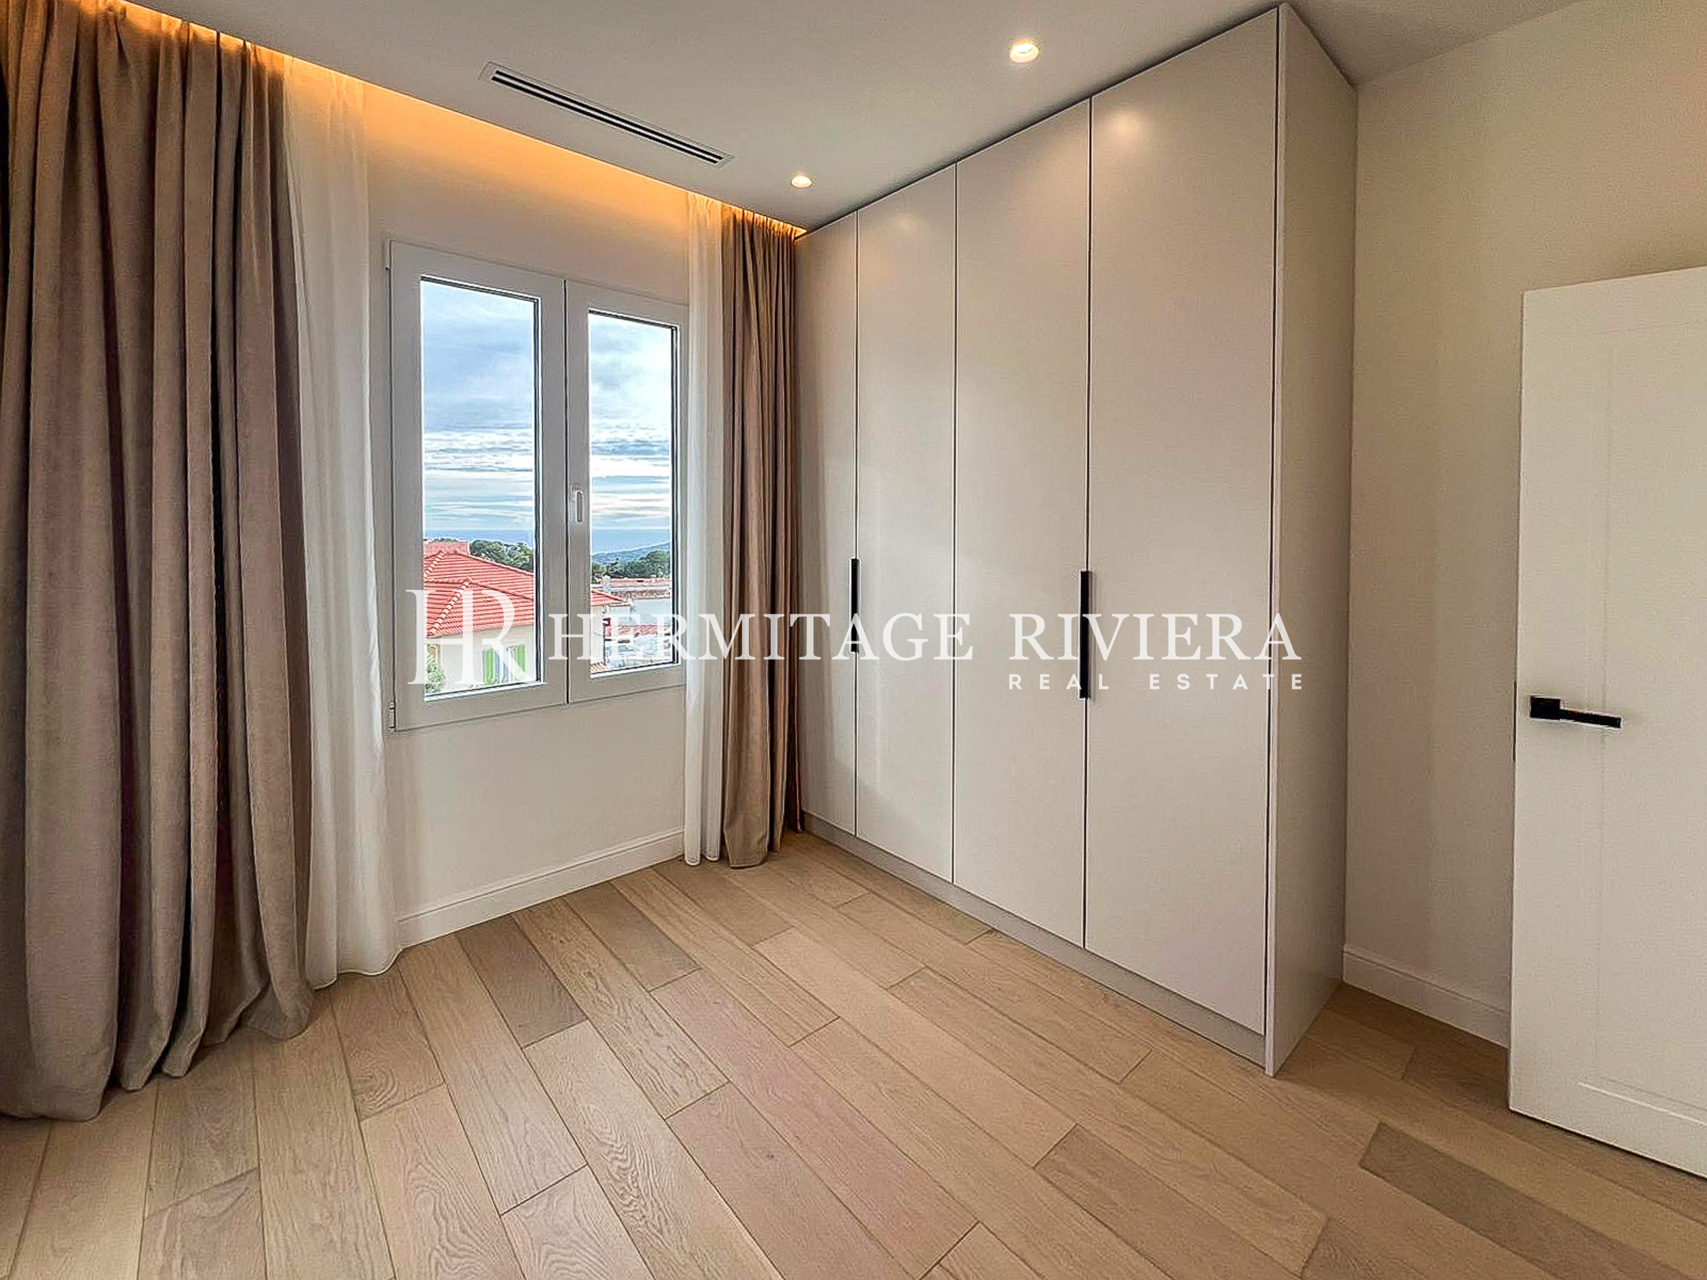 Splendid renovated apartment with panoramic sea view (image 14)